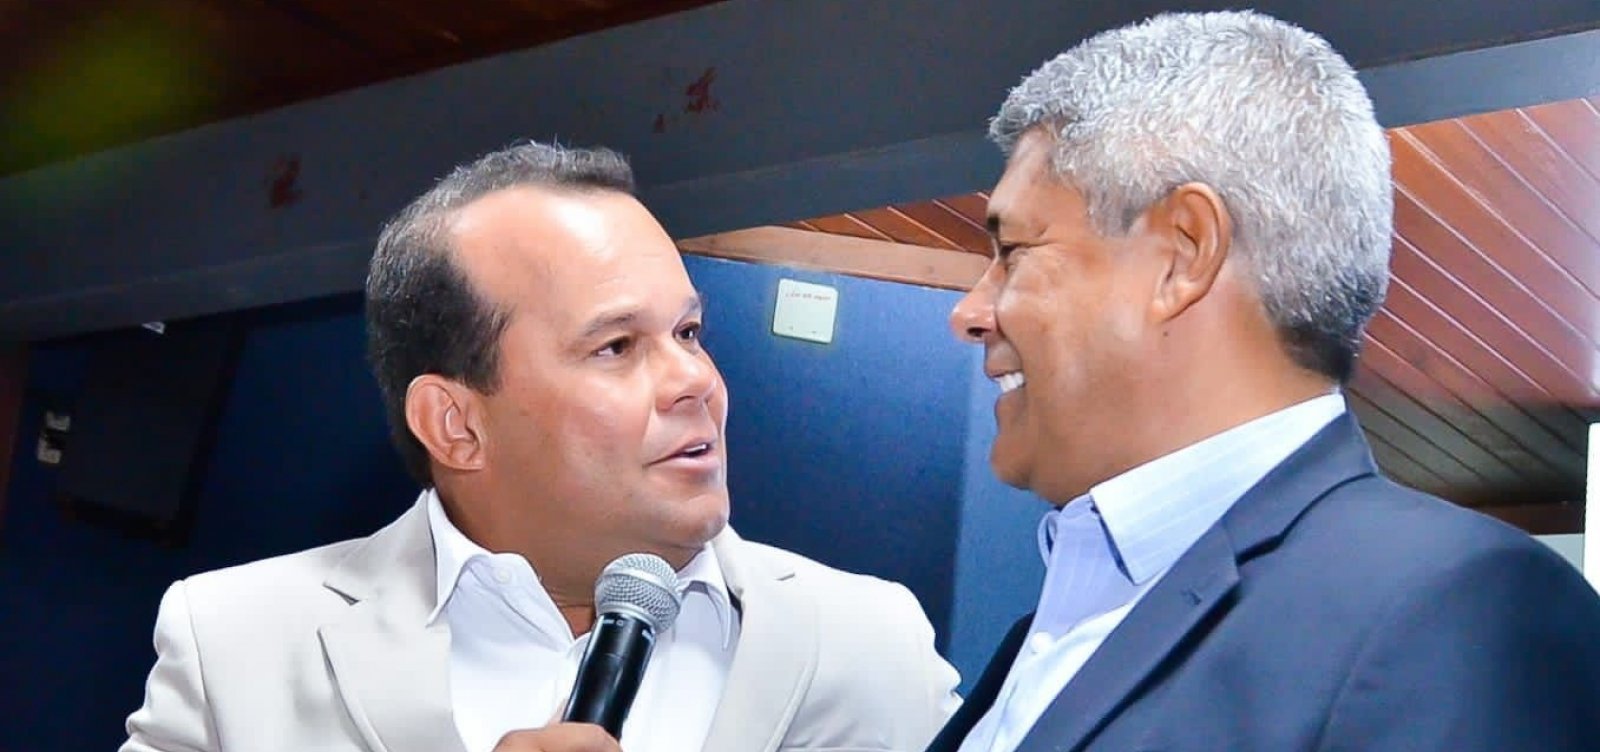 Martelo batido! Geraldo Jr. será anunciado como candidato a prefeito de Salvador